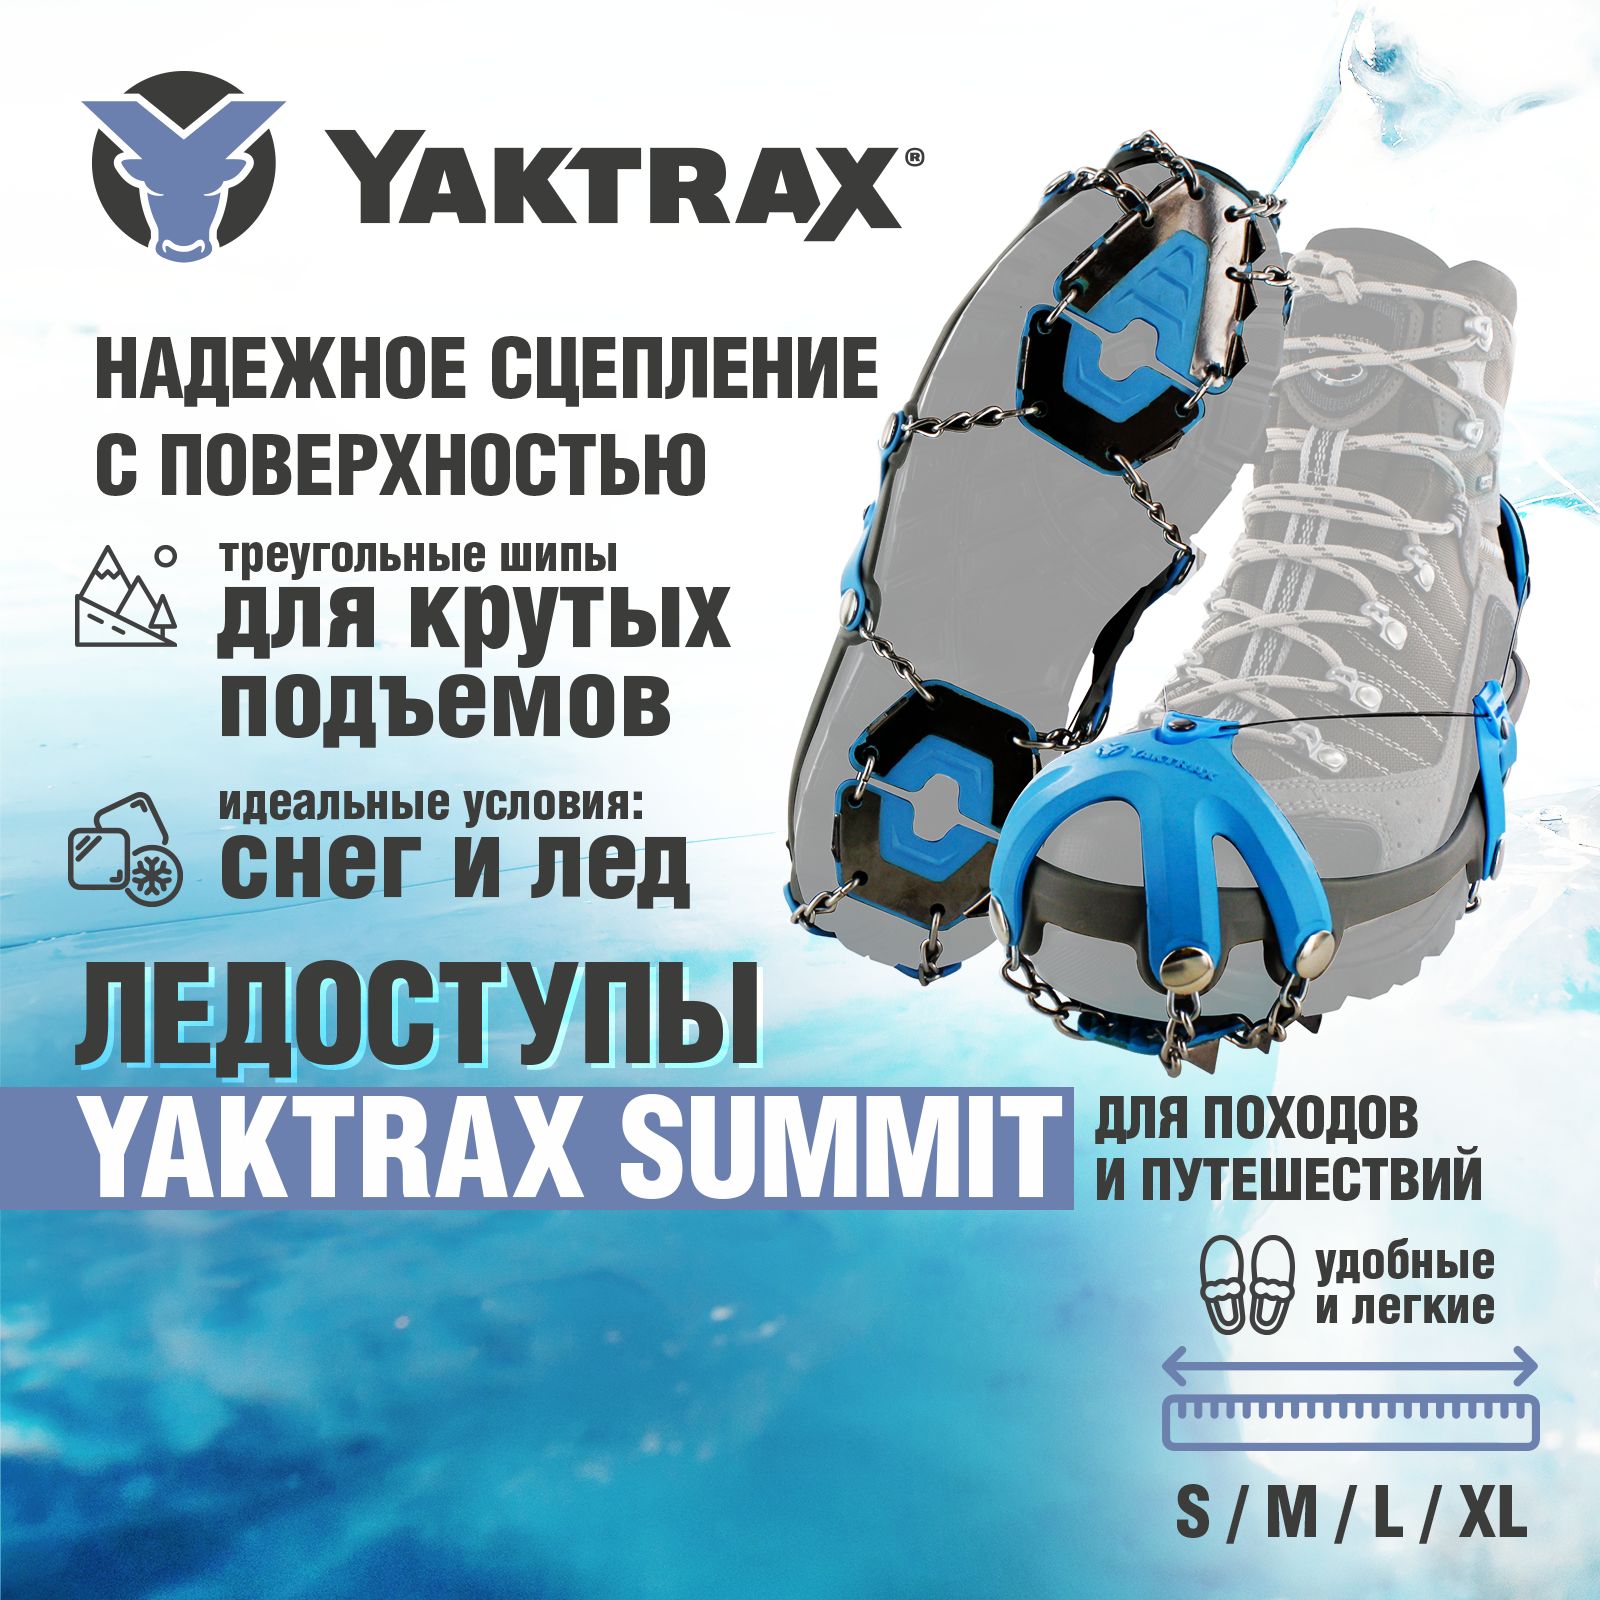 Ледоступы Yaktax Summit, размер 48+